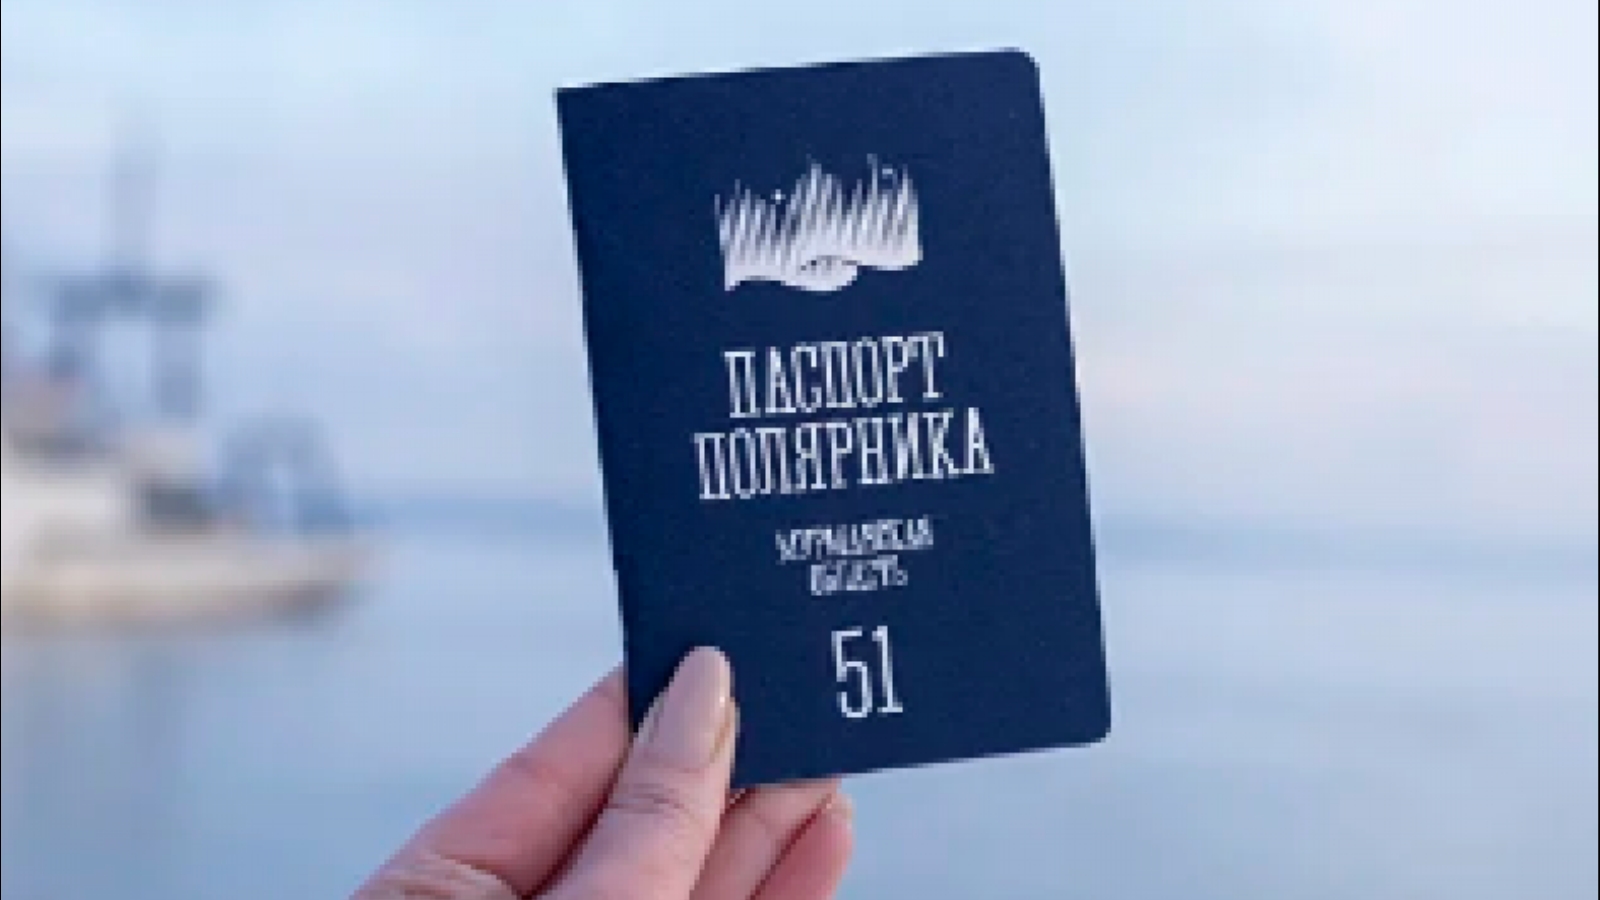 Паспорт полярника в Мурманске продают за 1 400 рублей